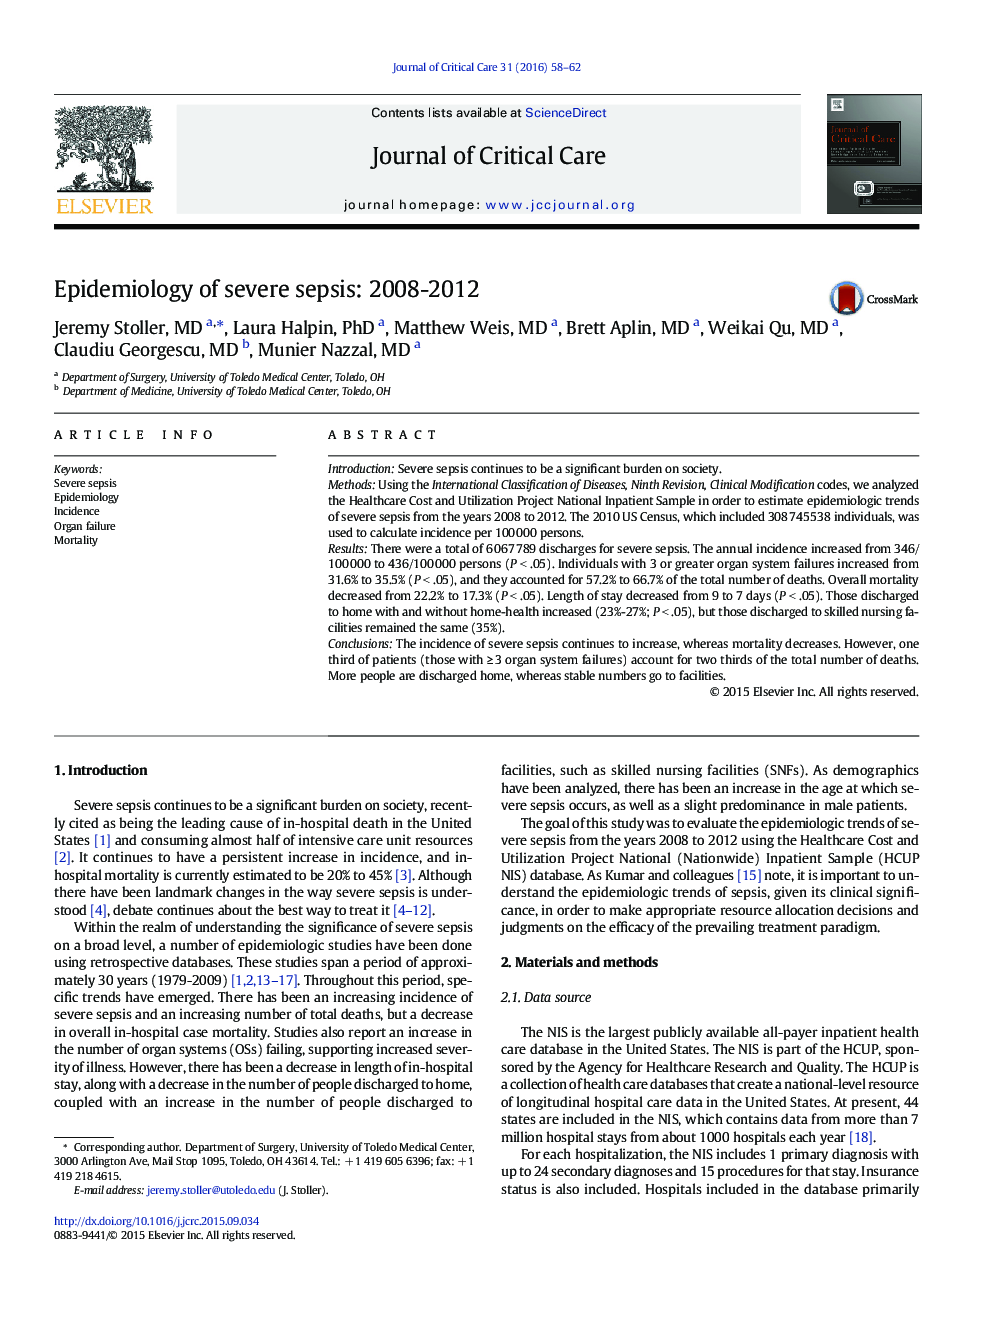 Epidemiology of severe sepsis: 2008-2012